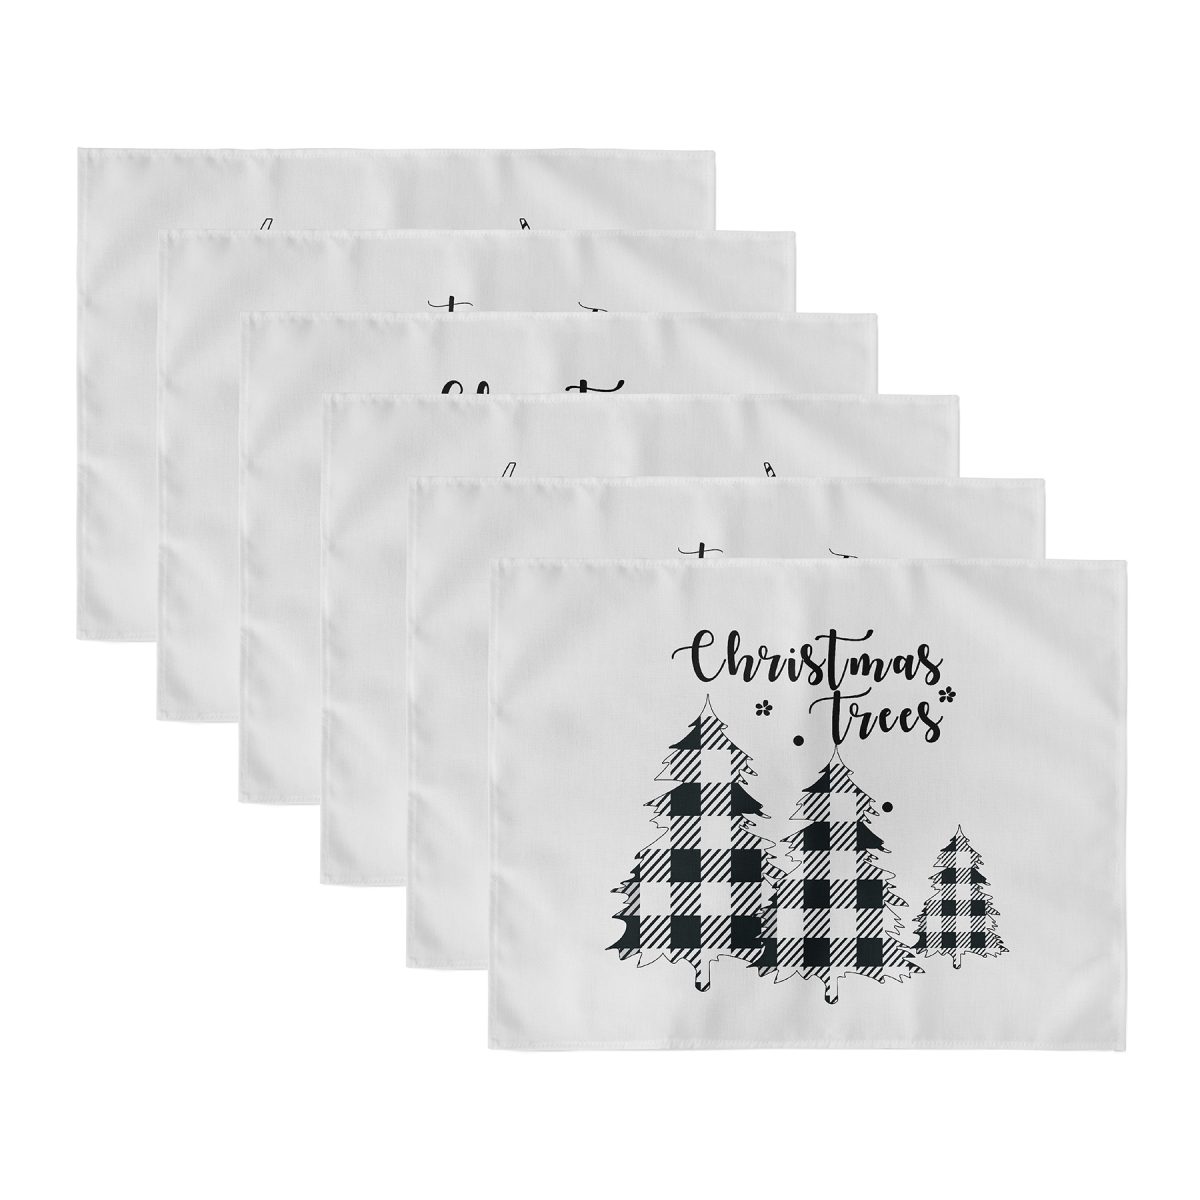 6'lı Siyah Beyaz Ekose Motifli Christmas Temalı Modern Sunum Altlığı - Amerikan Servis Seti Realhomes